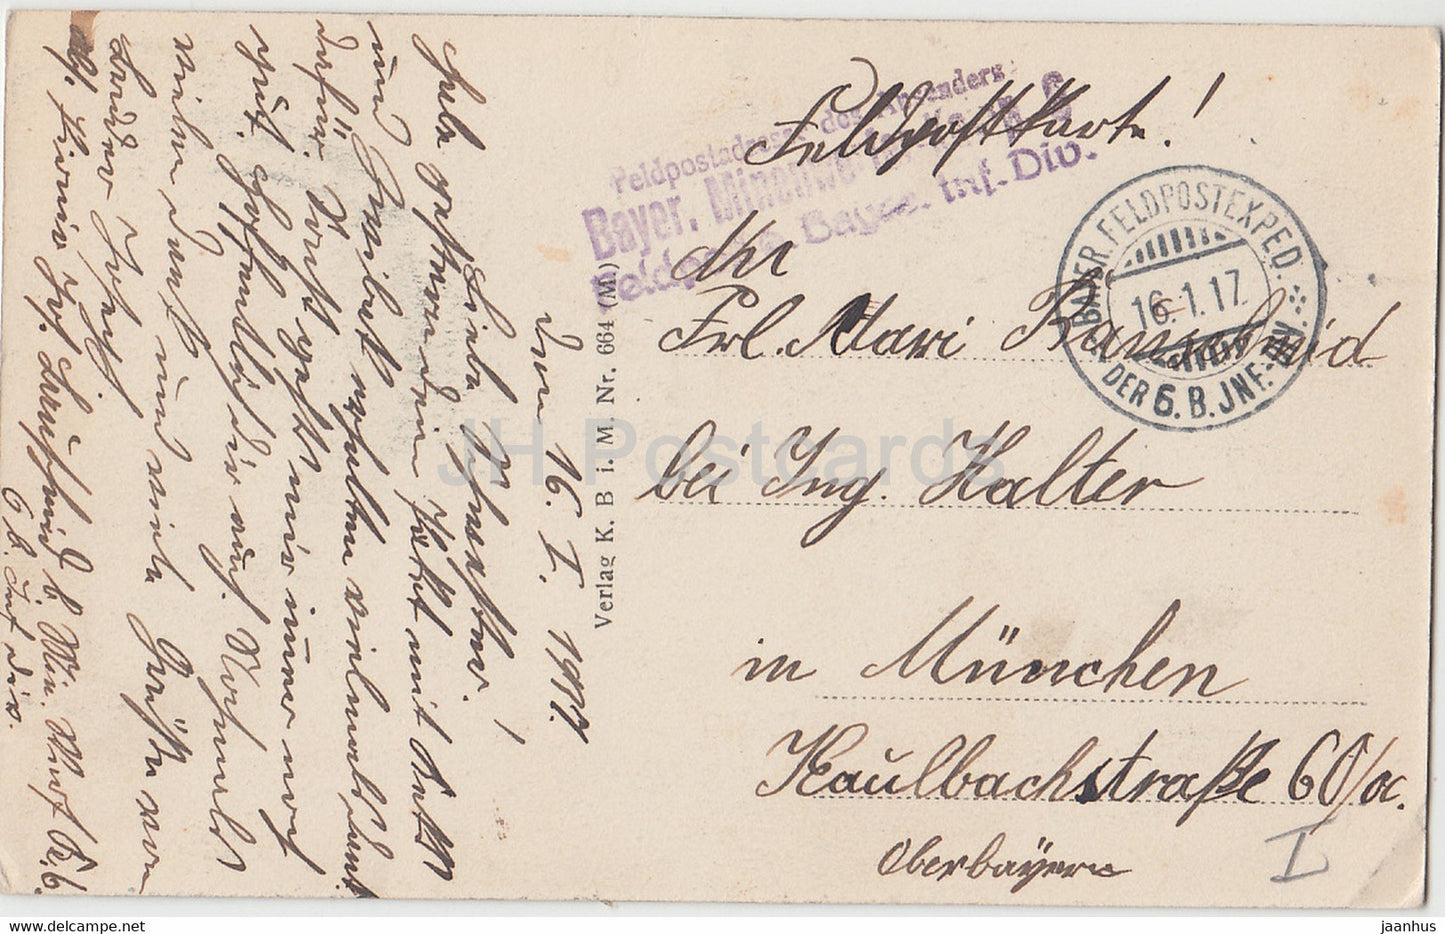 Kirche v Belloy - Bayer Minenwerfer Korp - Feldpost - carte postale ancienne - 1917 - France - utilisé